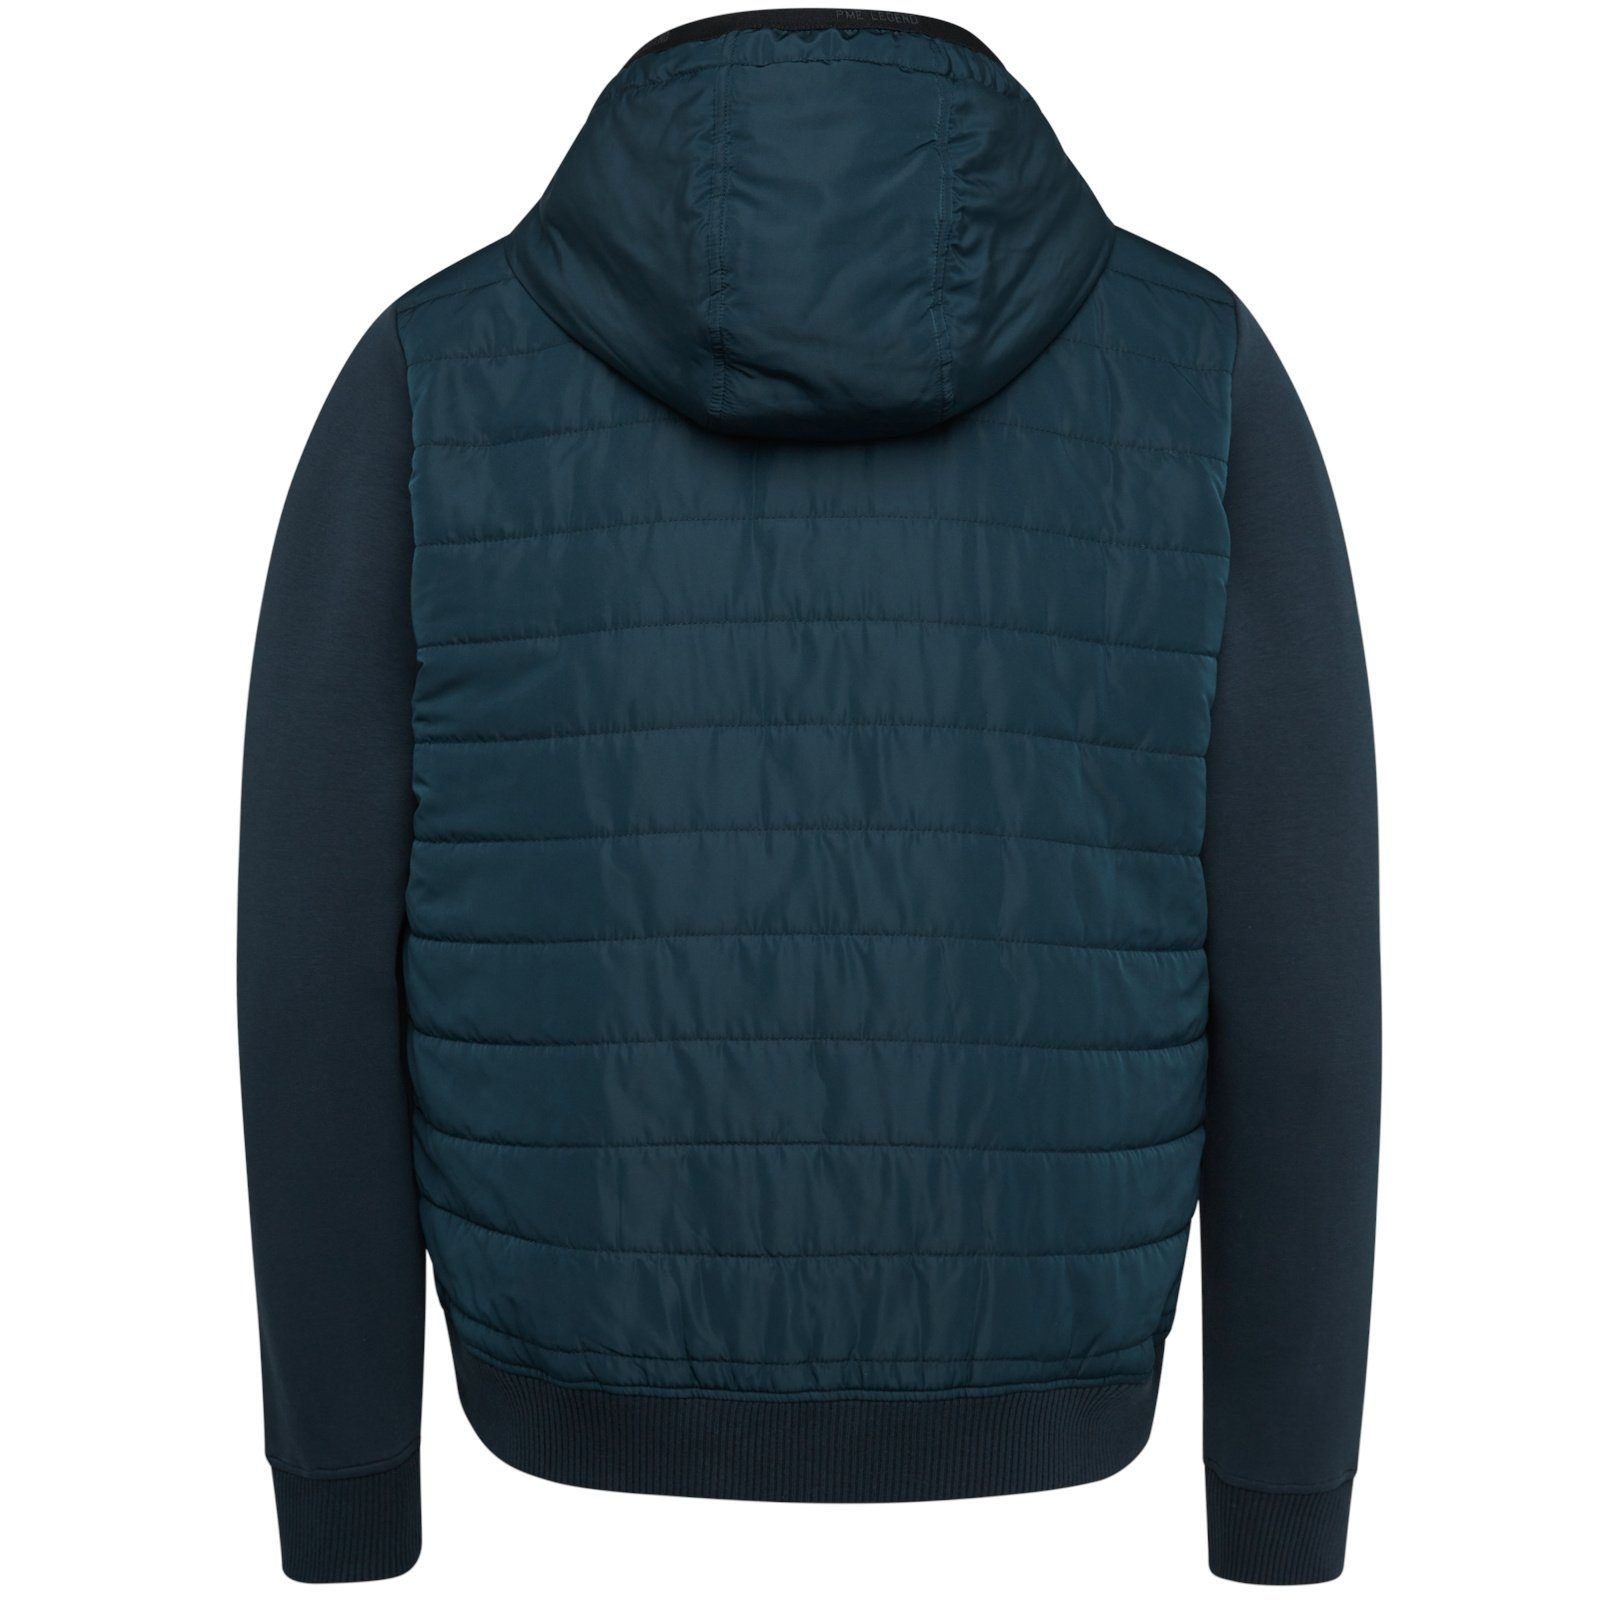 LEGEND PME mix nylon jacket interlock Steppjacke Hooded padded